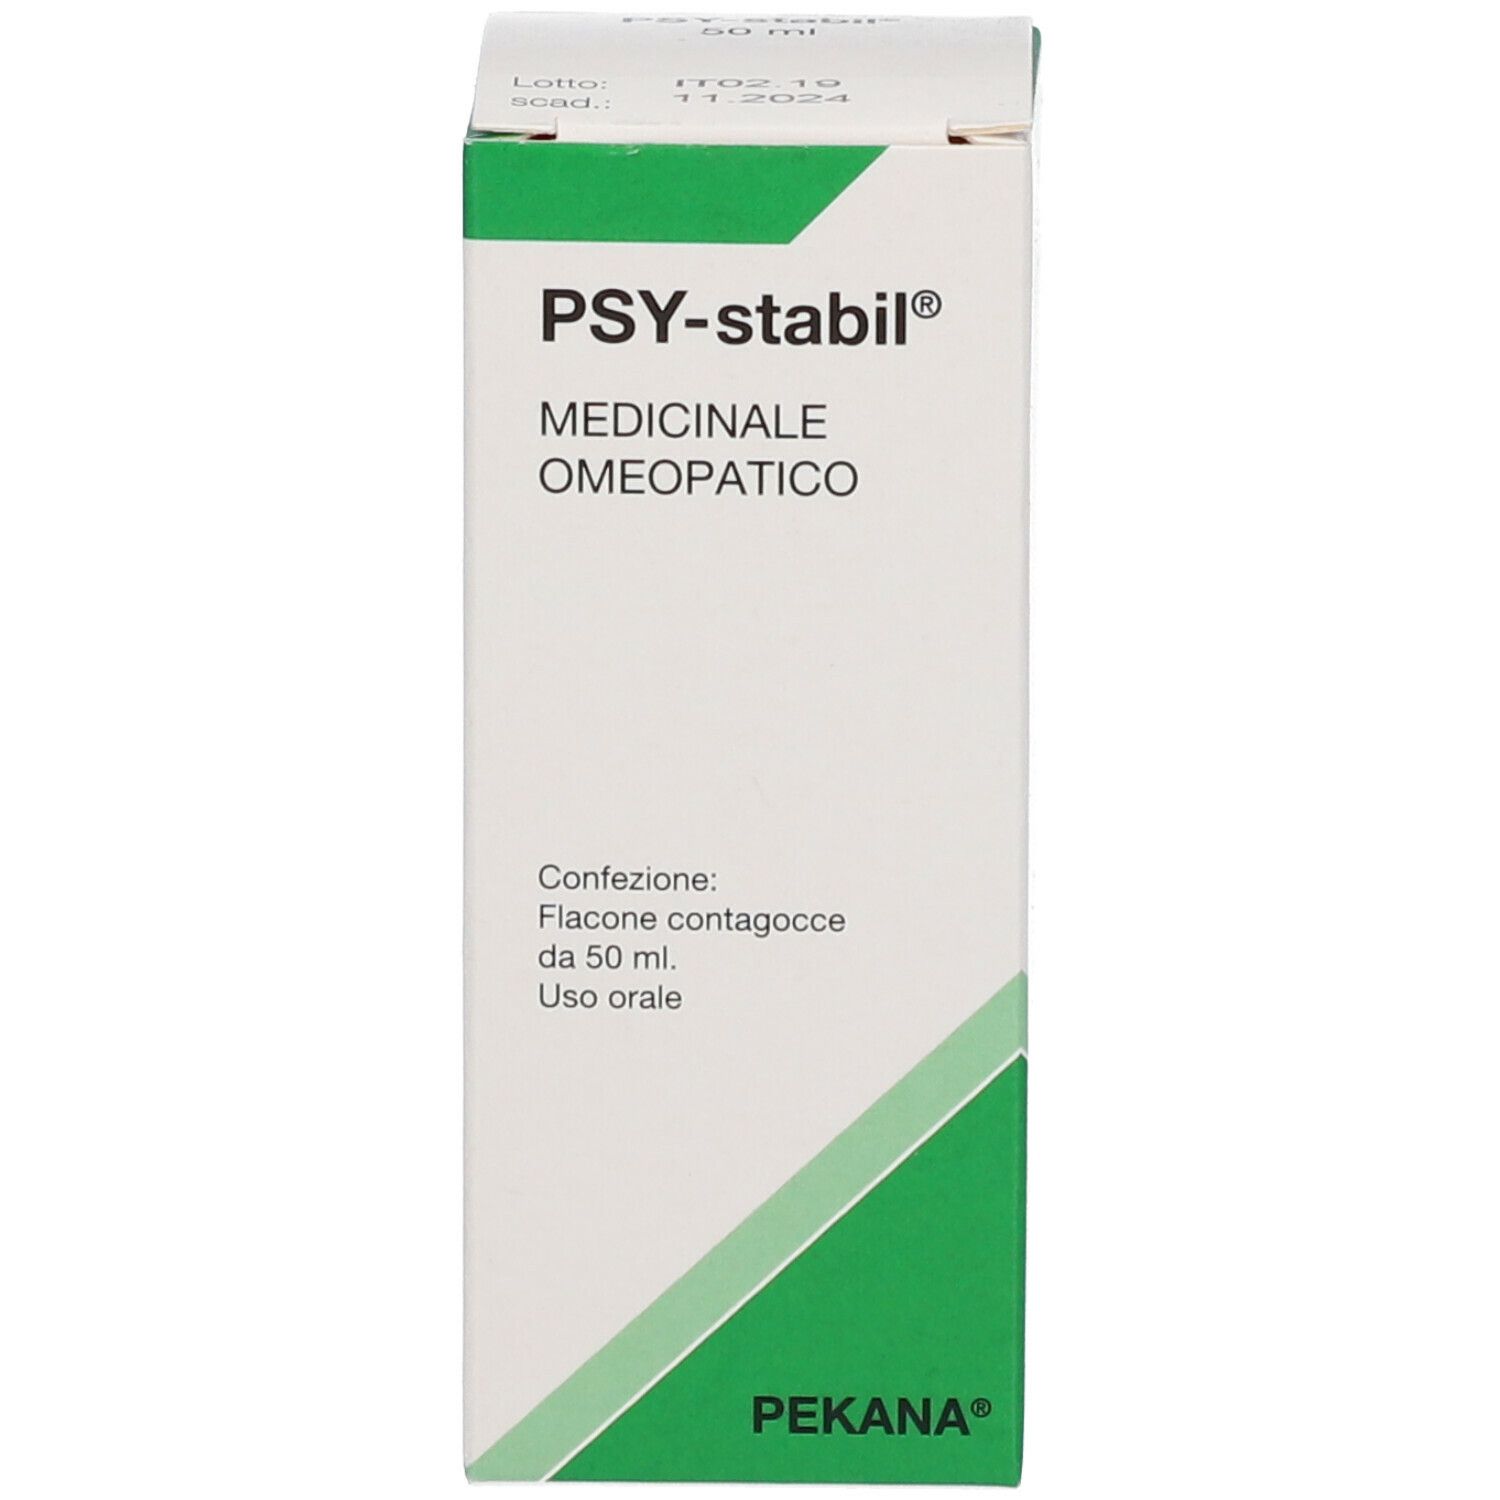 PEKANA® PSY-Stabil® Gocce Orali 50 ml